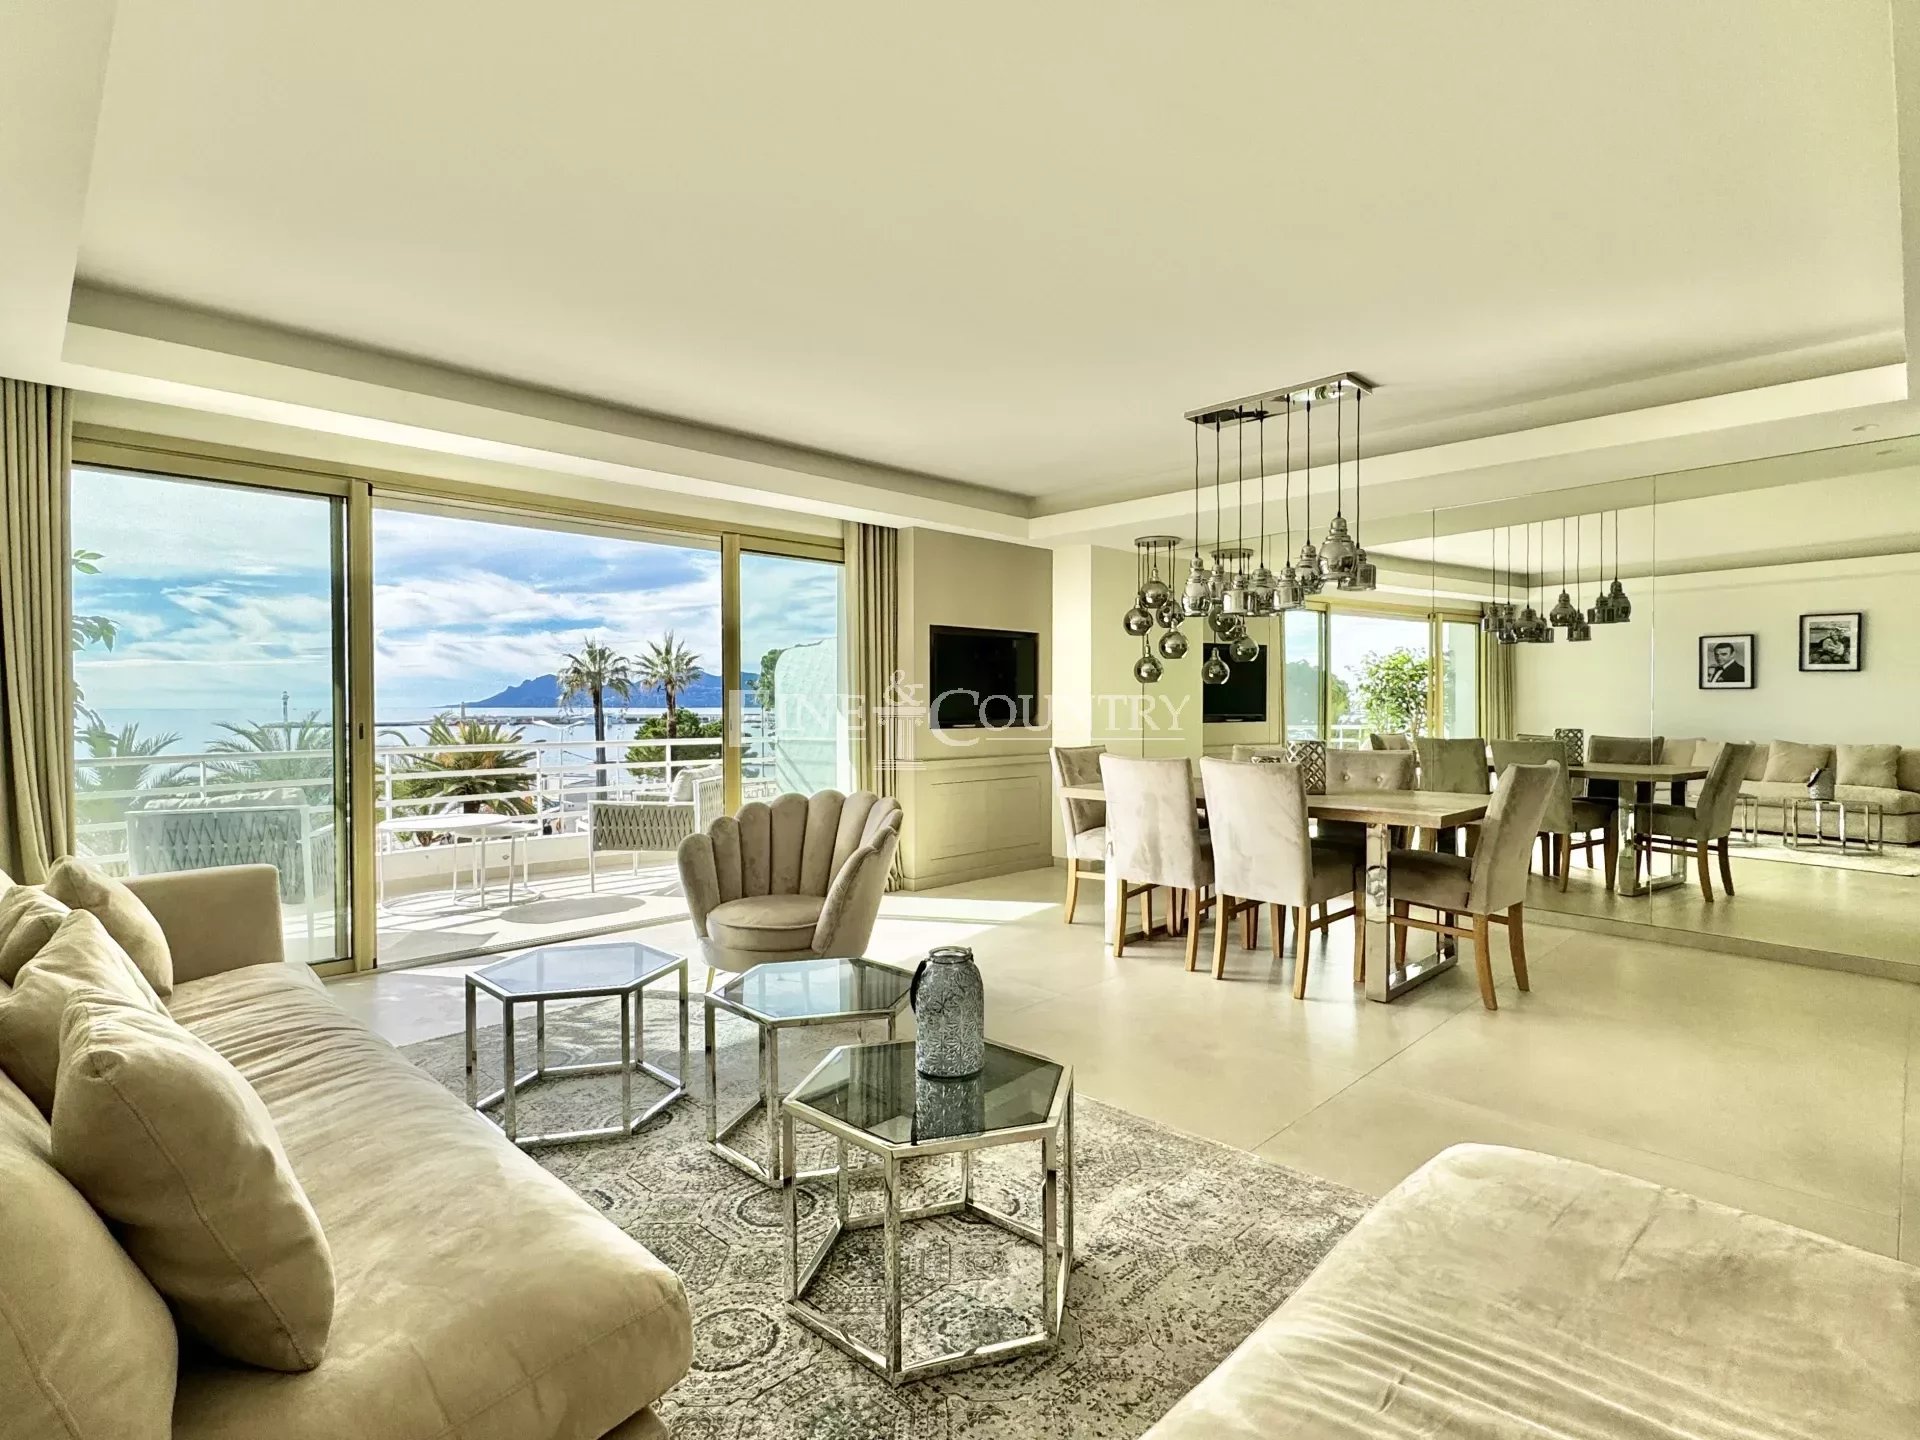 Luxury Croisette Apartment for sale on the Croisette, Cannes